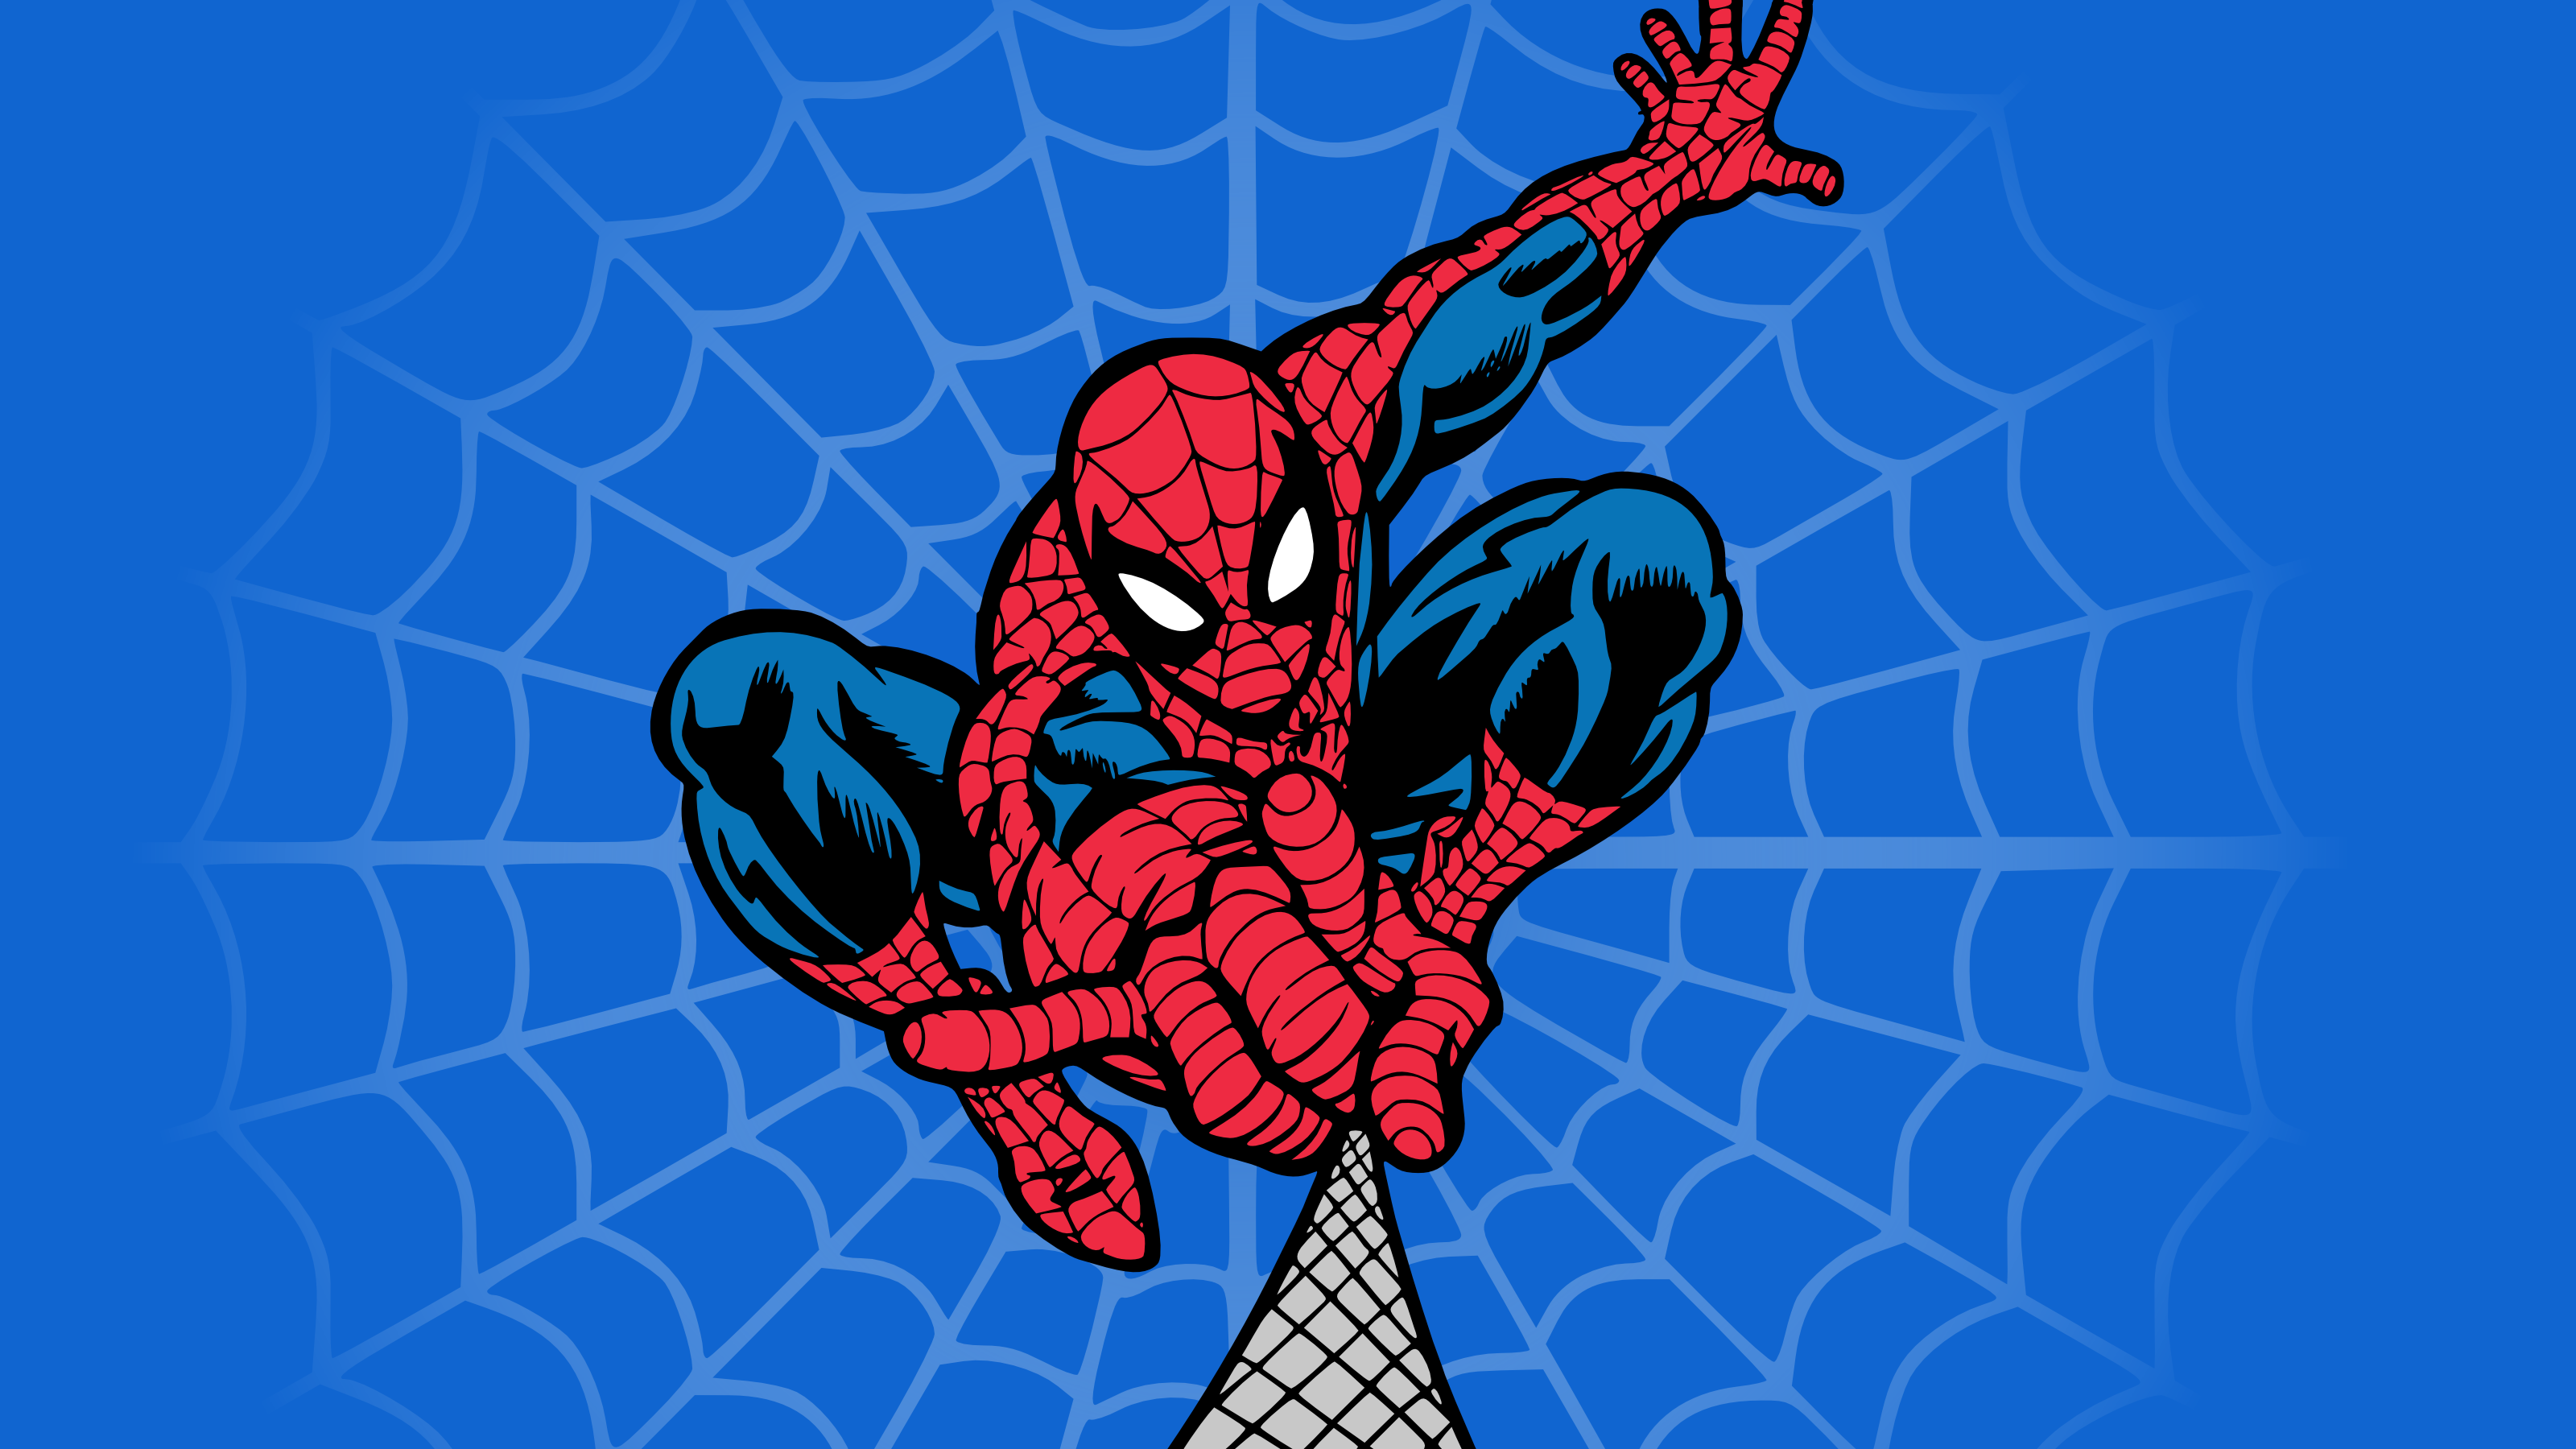 Spiderman comics spider man superhero wallpaper 3200x1800 39506 3200x1800